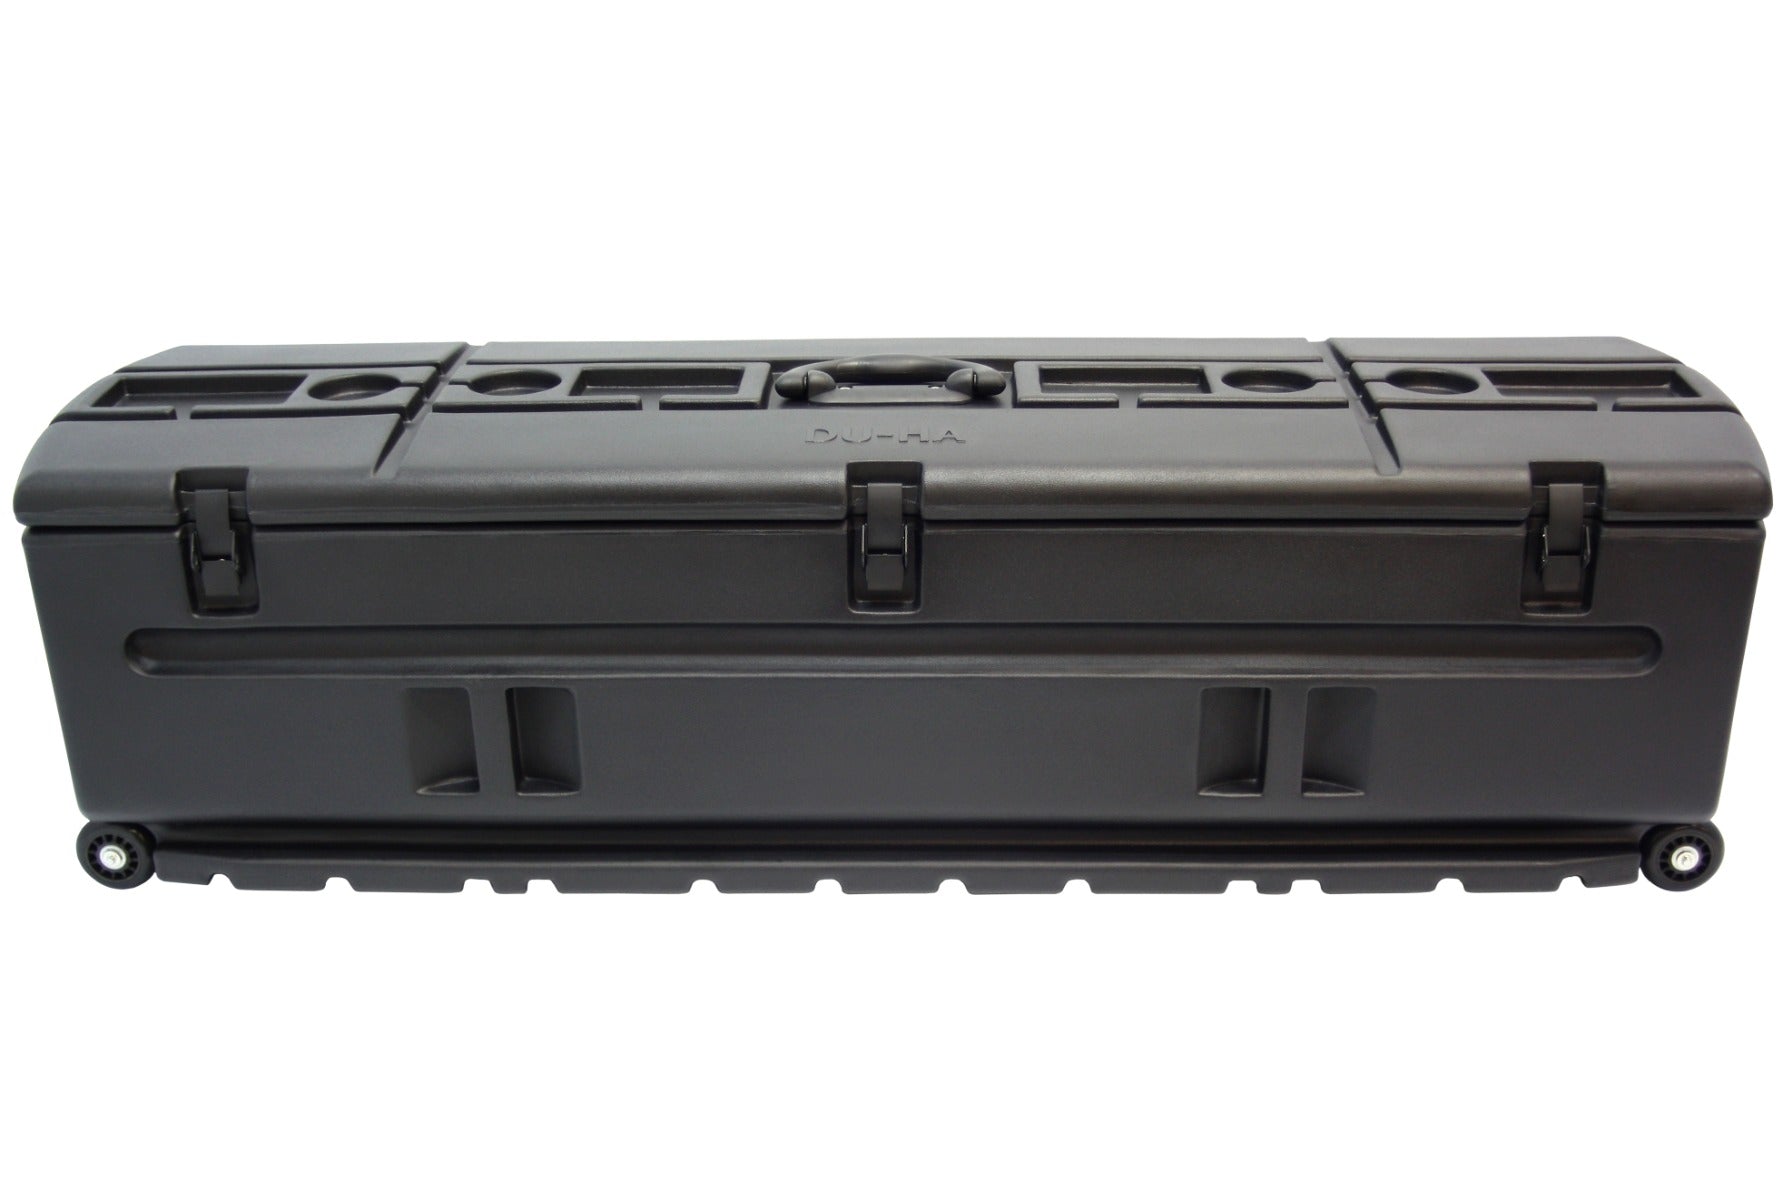 DÜHA Tote Gun and Gear Truck Storage Box | Heavy-Duty, Portable Rolling Tool Box or Gun Case for SUV&